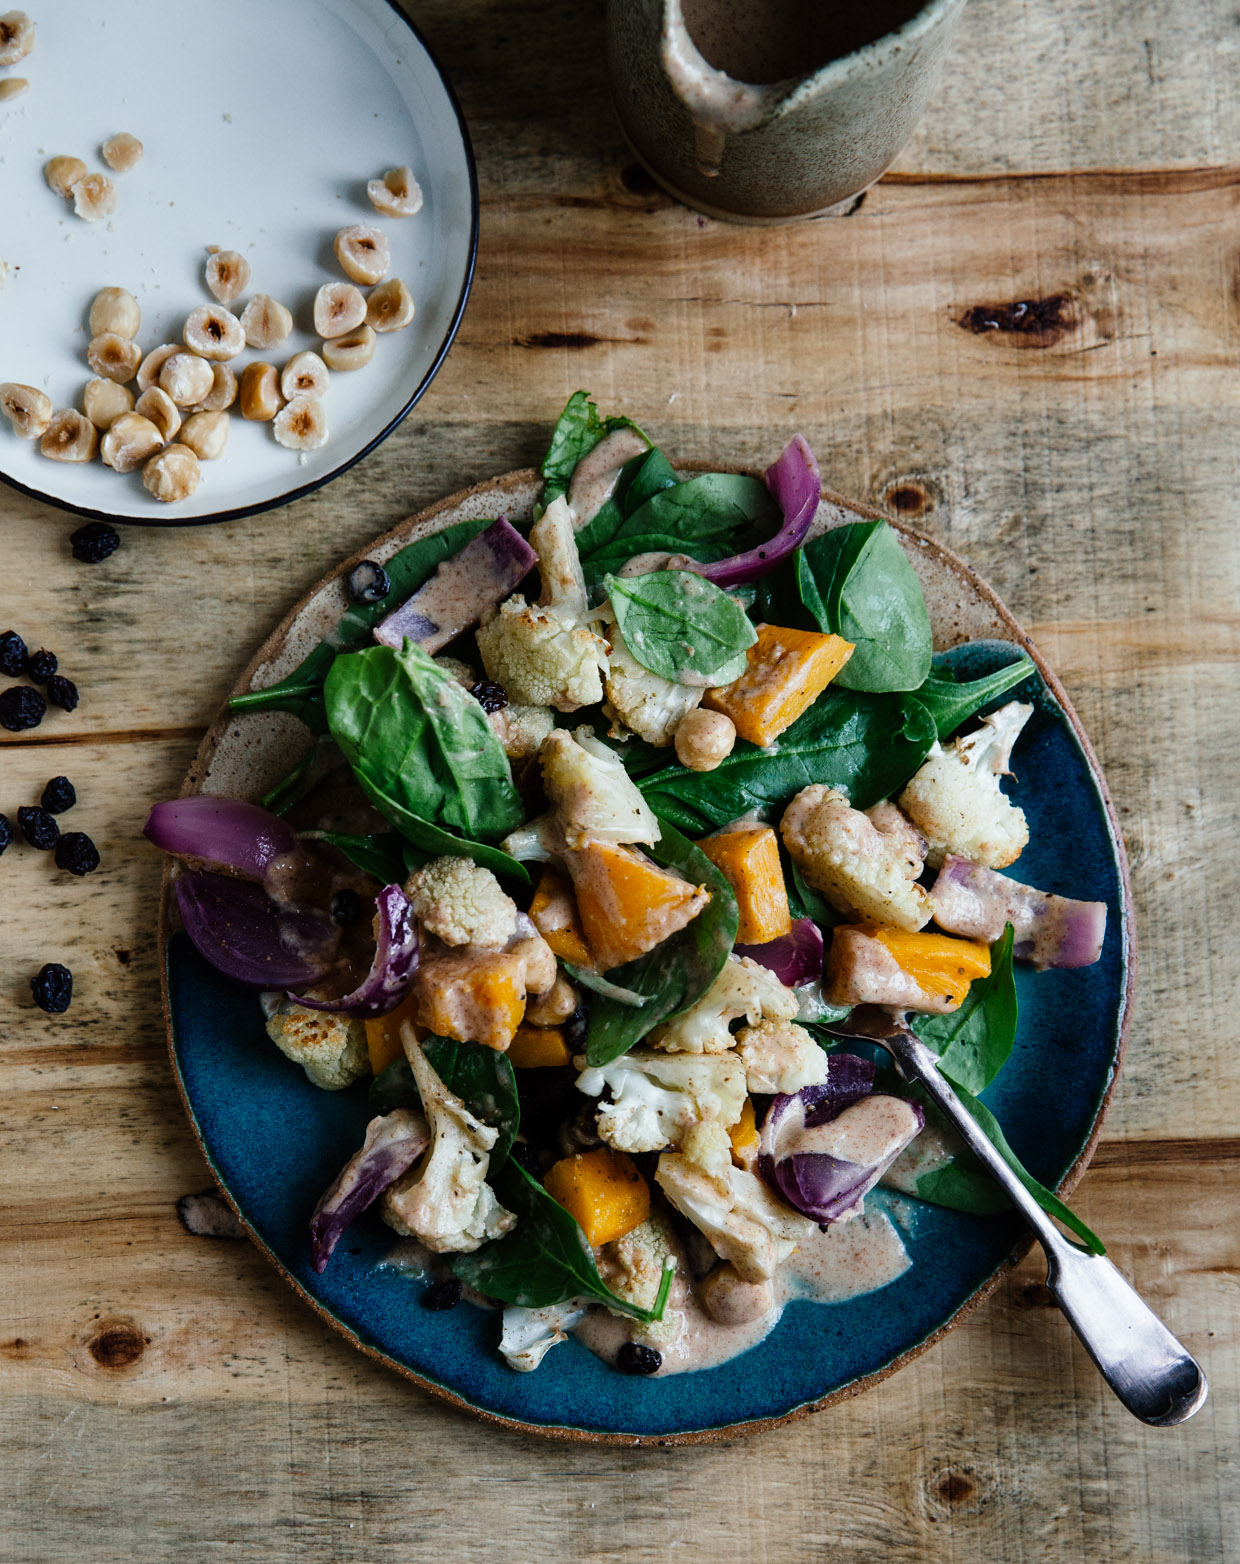 Cauliflower, spinach & hazelnut salad with peanut butter dressing